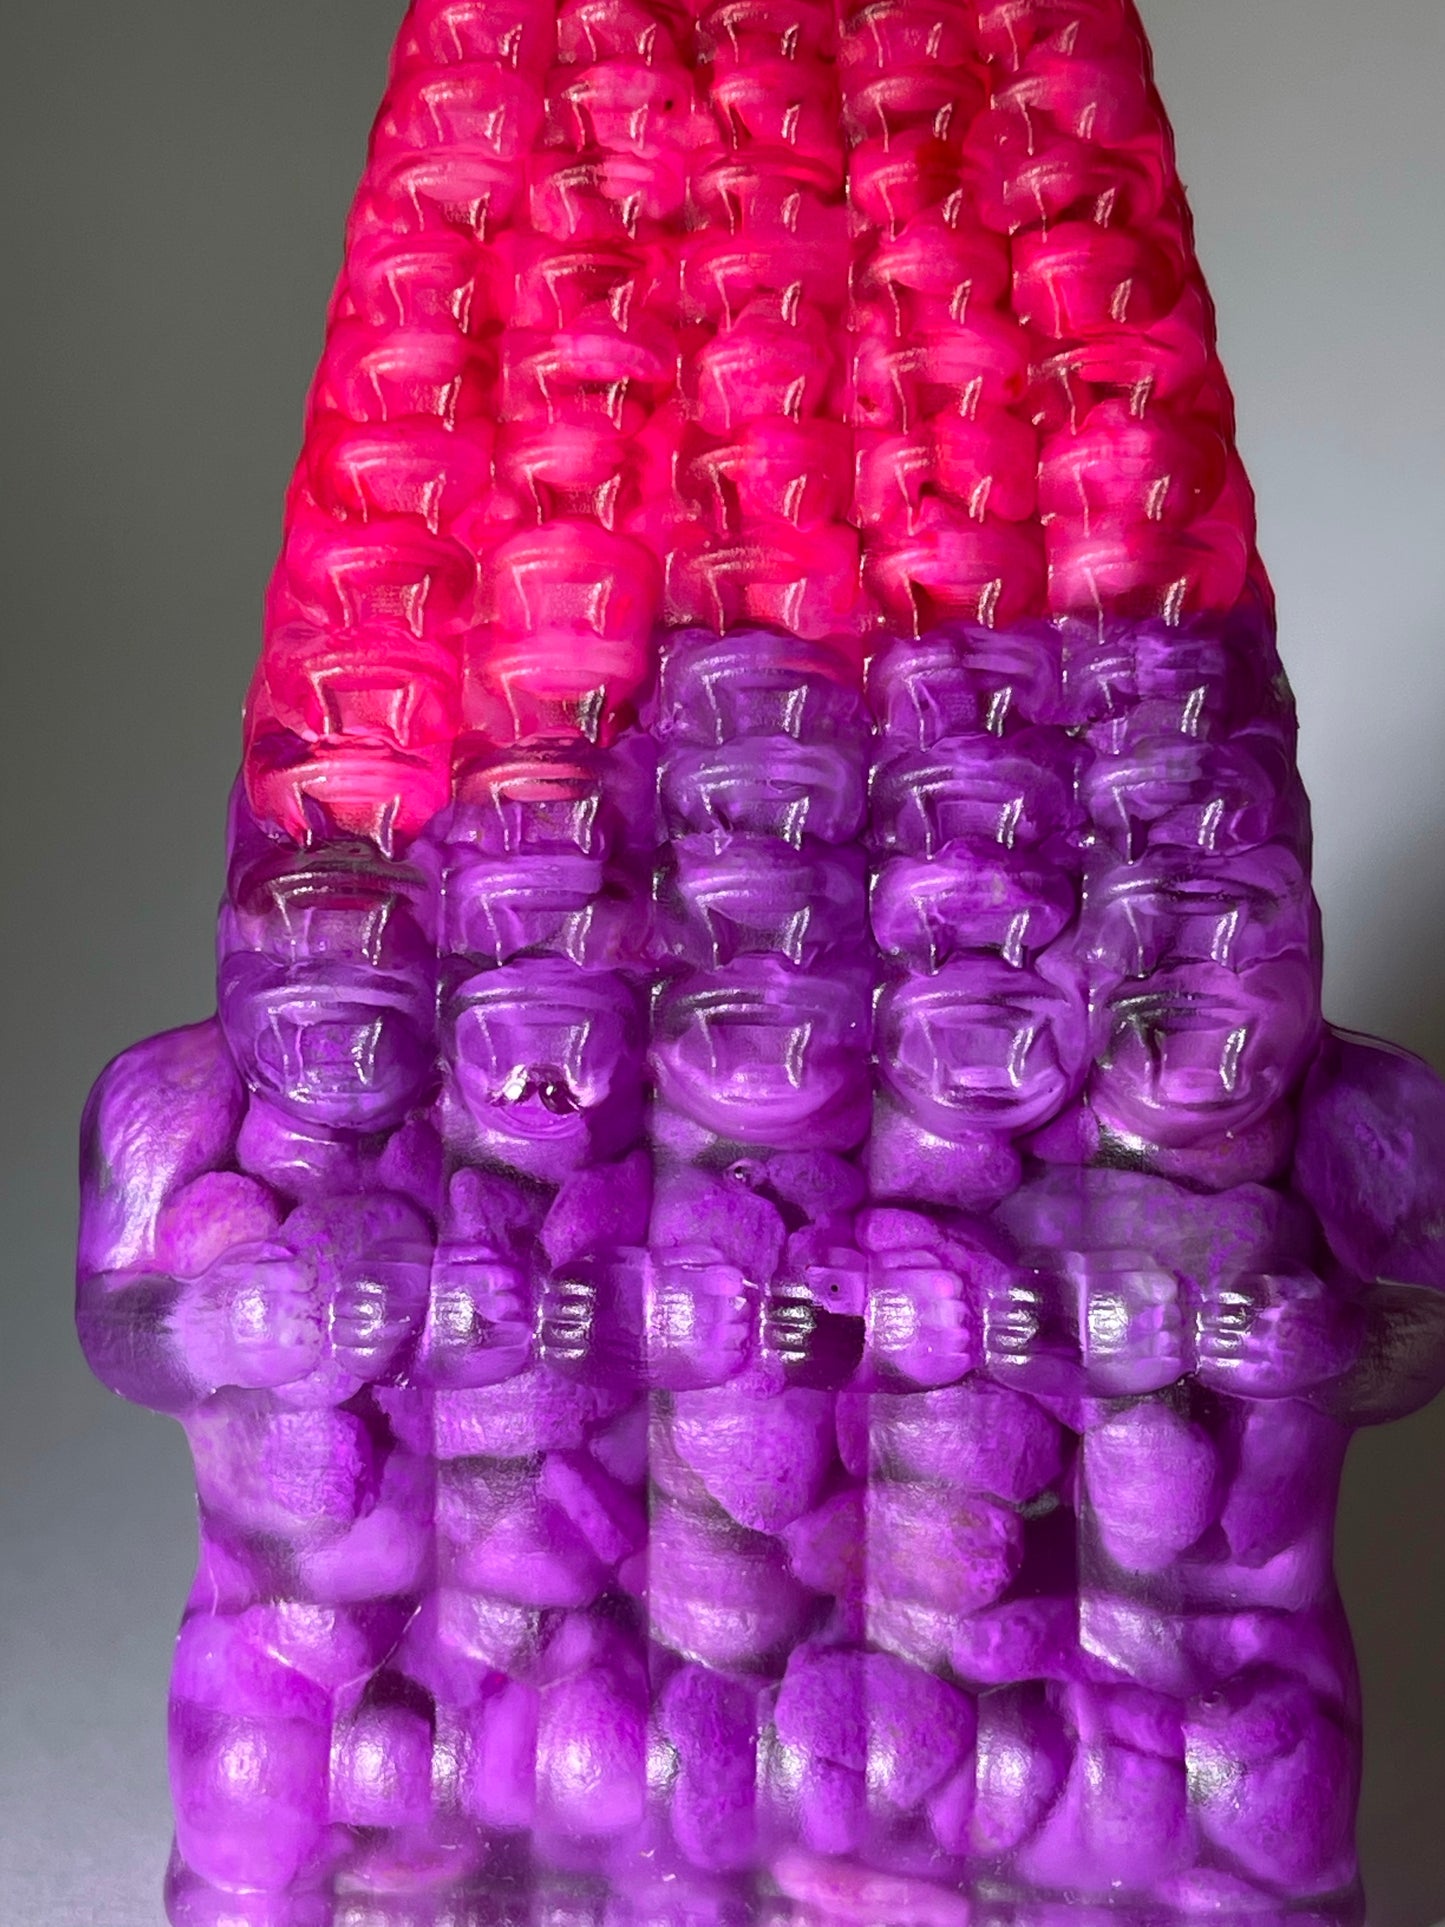 200 Head Ape: Resin Cast with Neon Stones